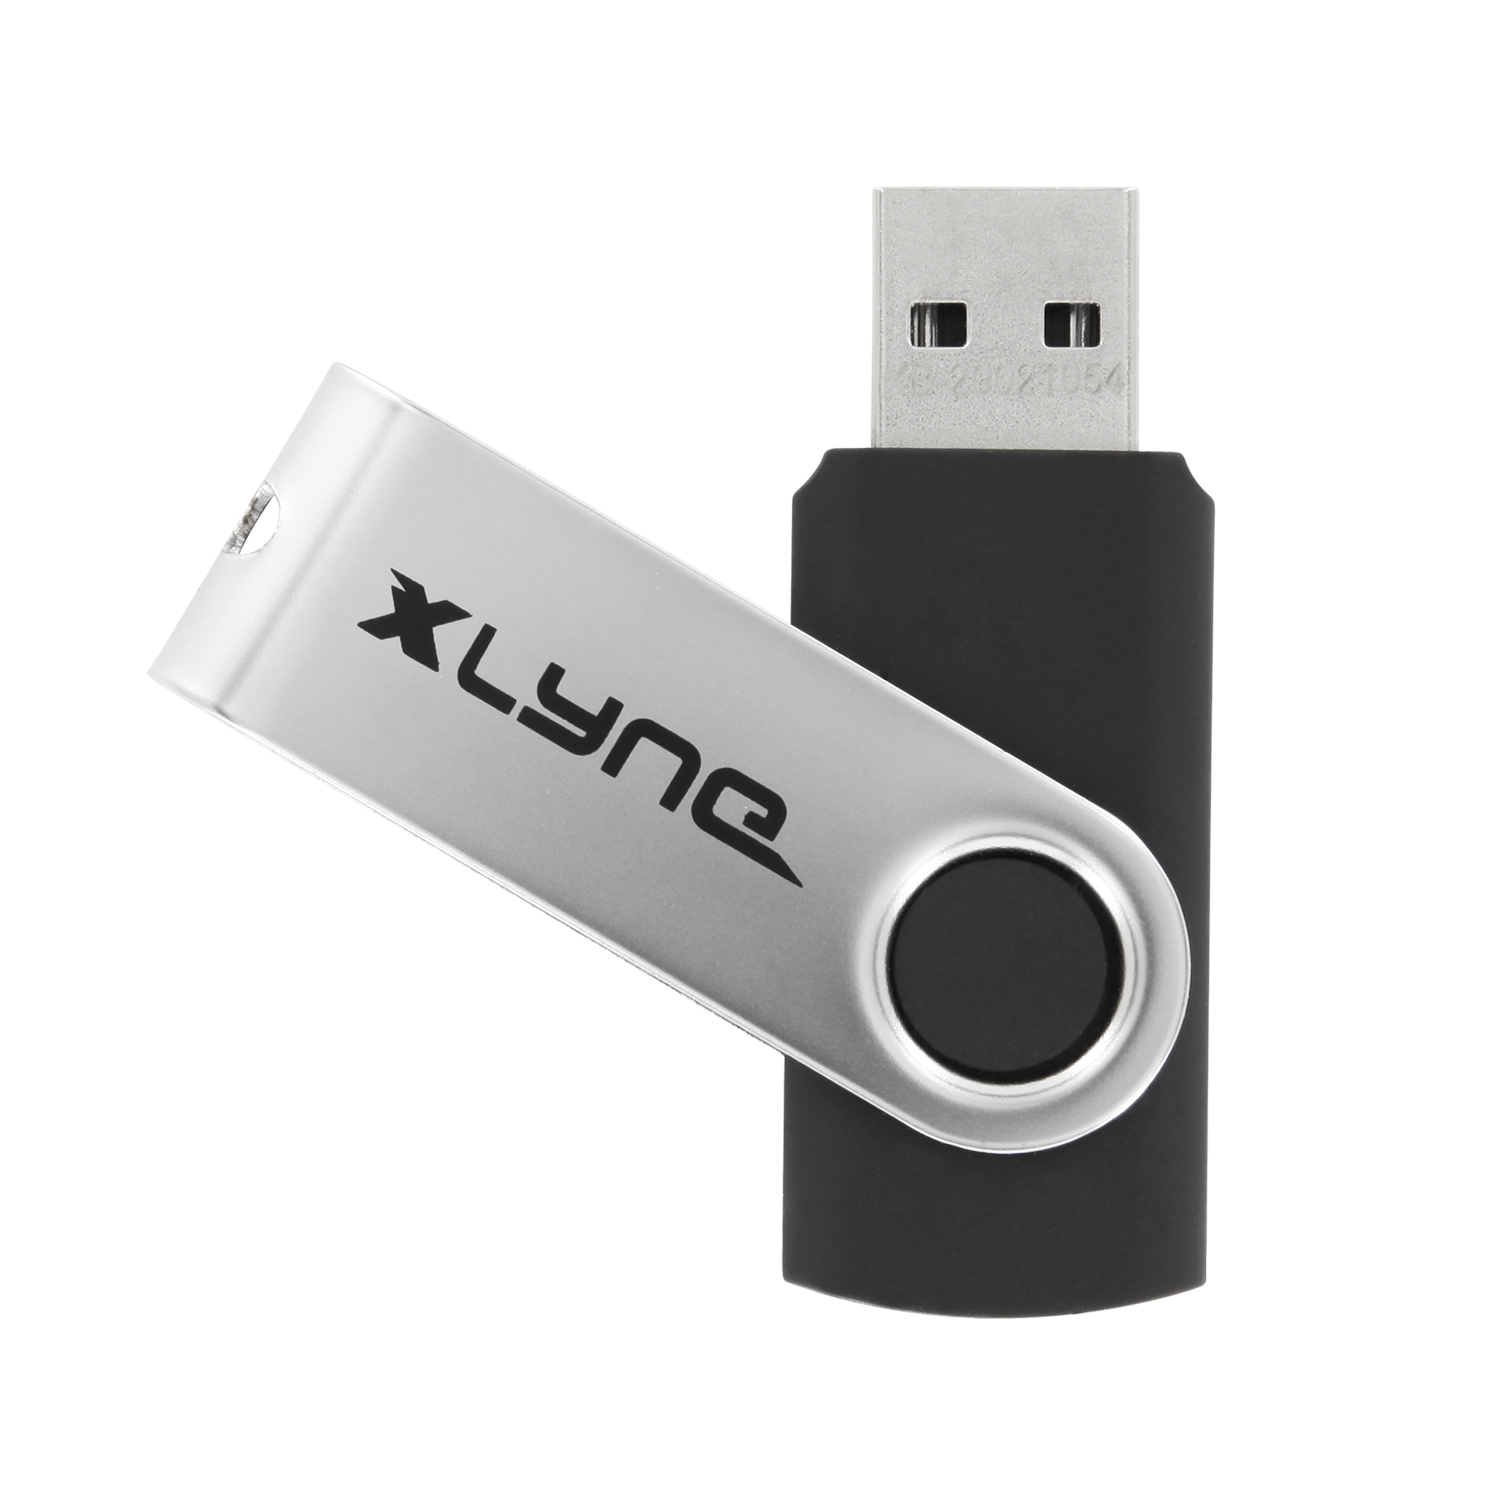 XLYNE USB 2.0 - 64 / SILBER, USB GB) 64 GB Stick (SCHWARZ